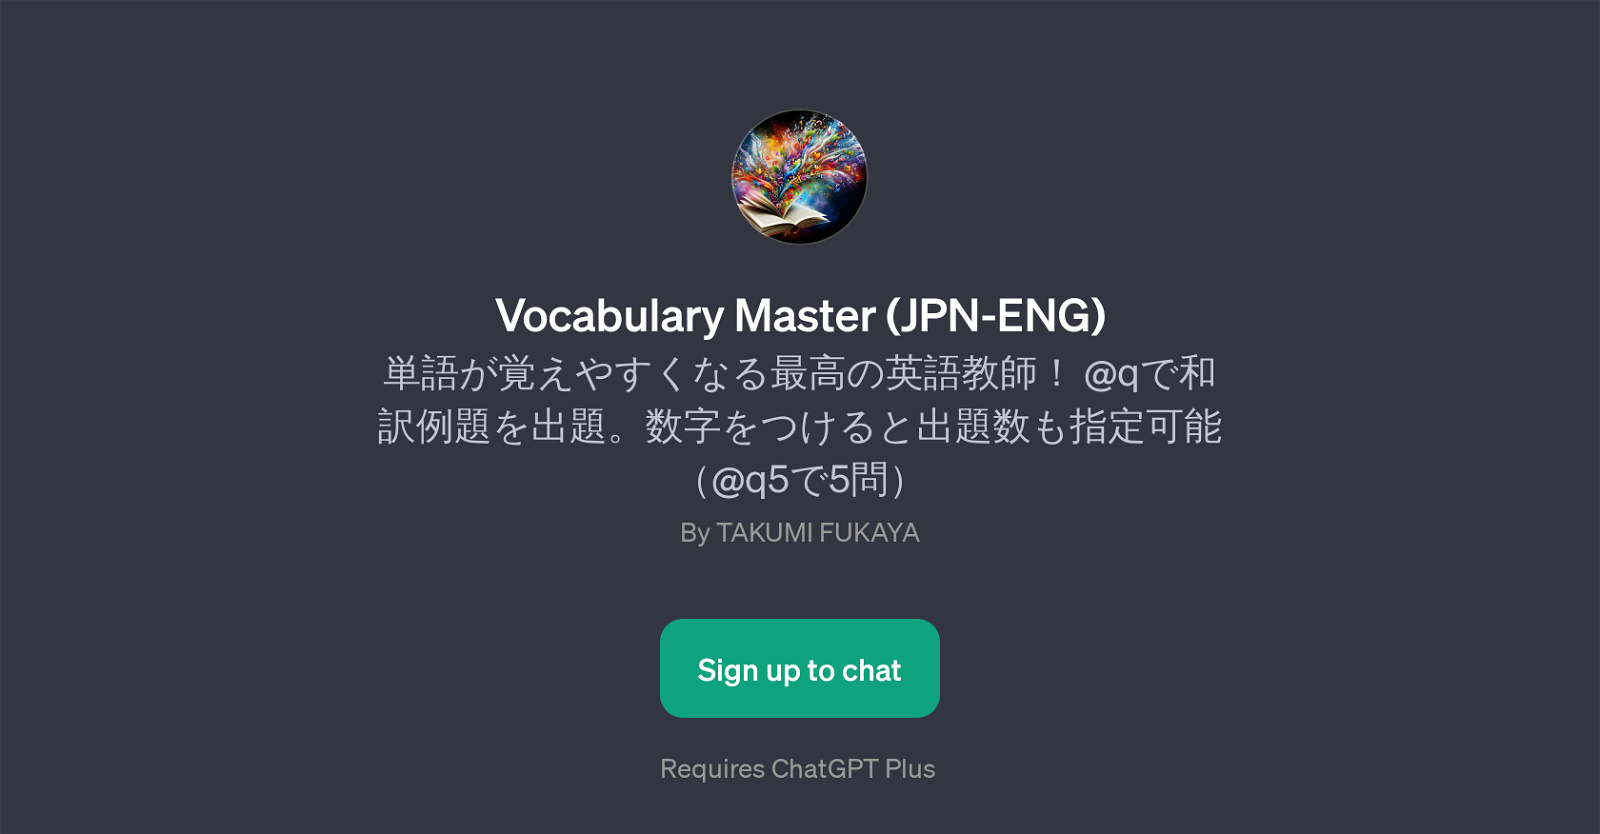 Vocabulary Master (JPN-ENG) website